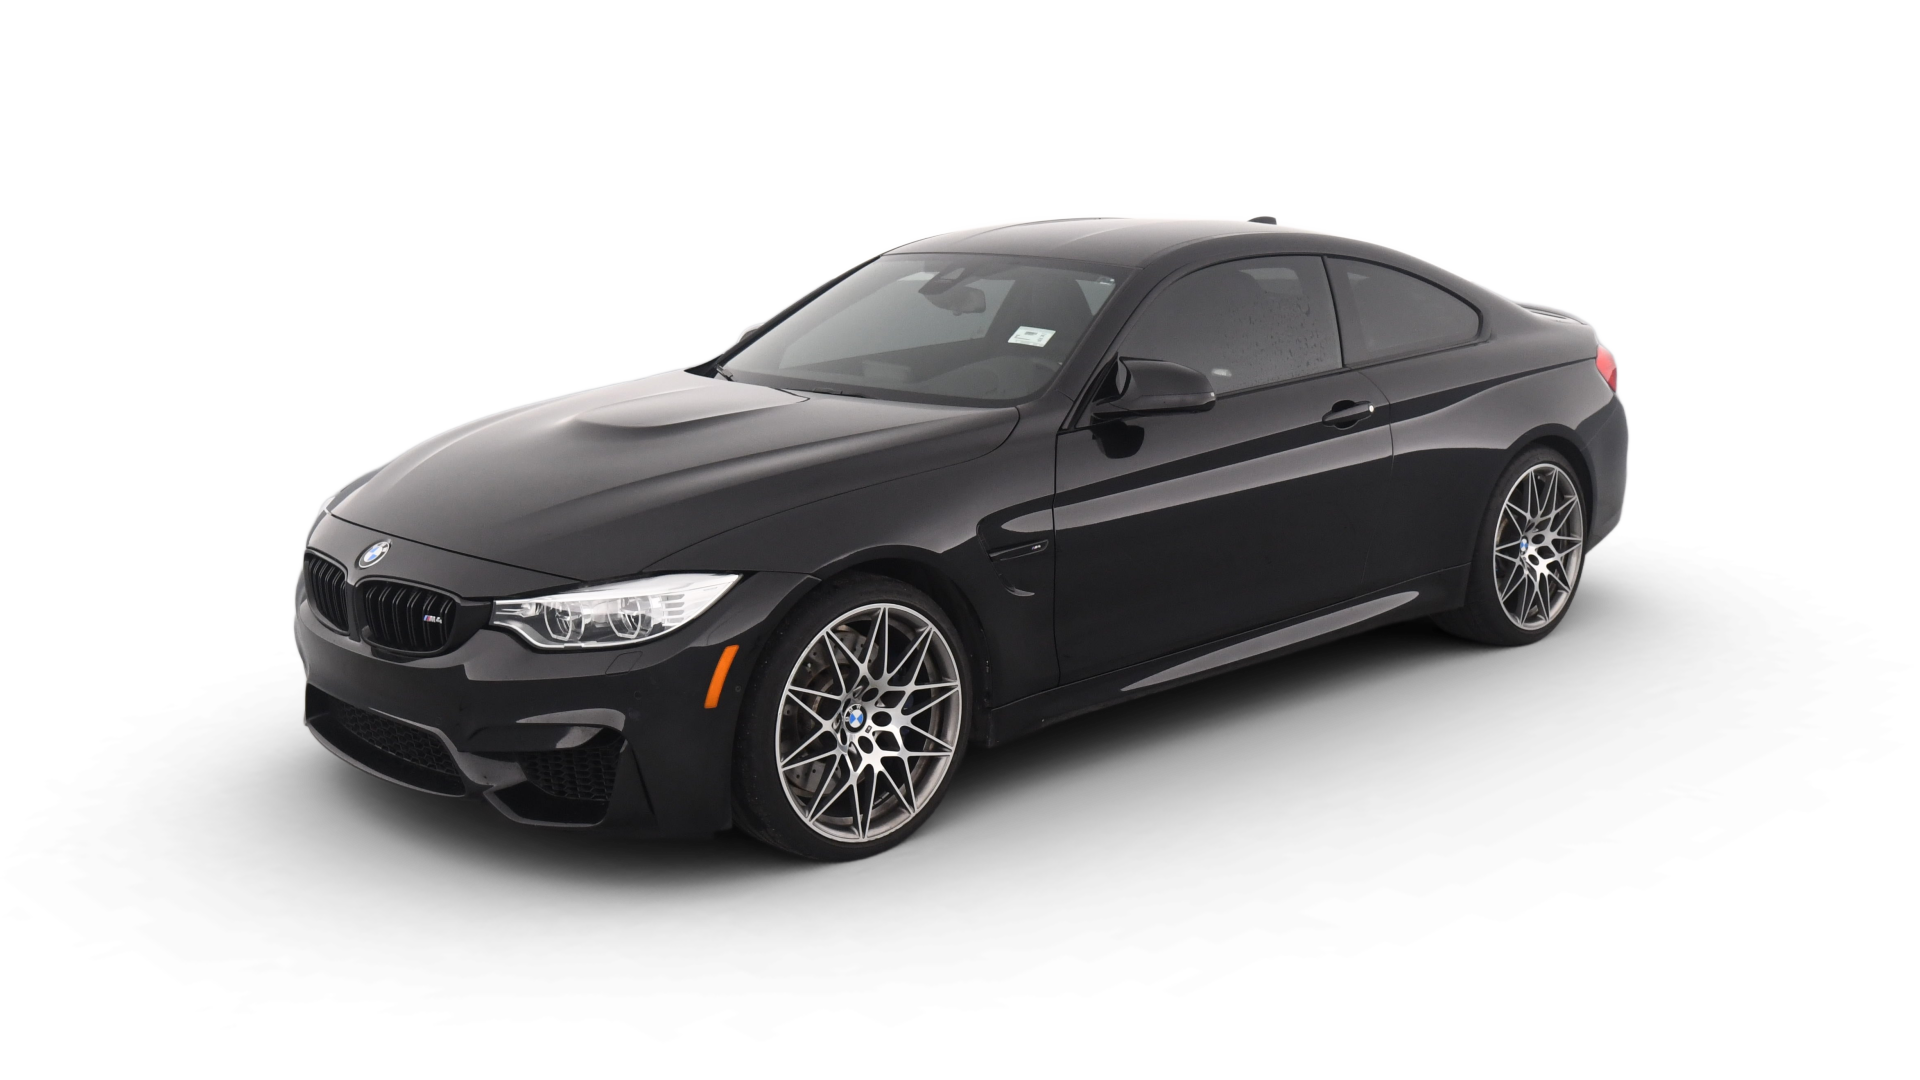 BMW M4 model image.